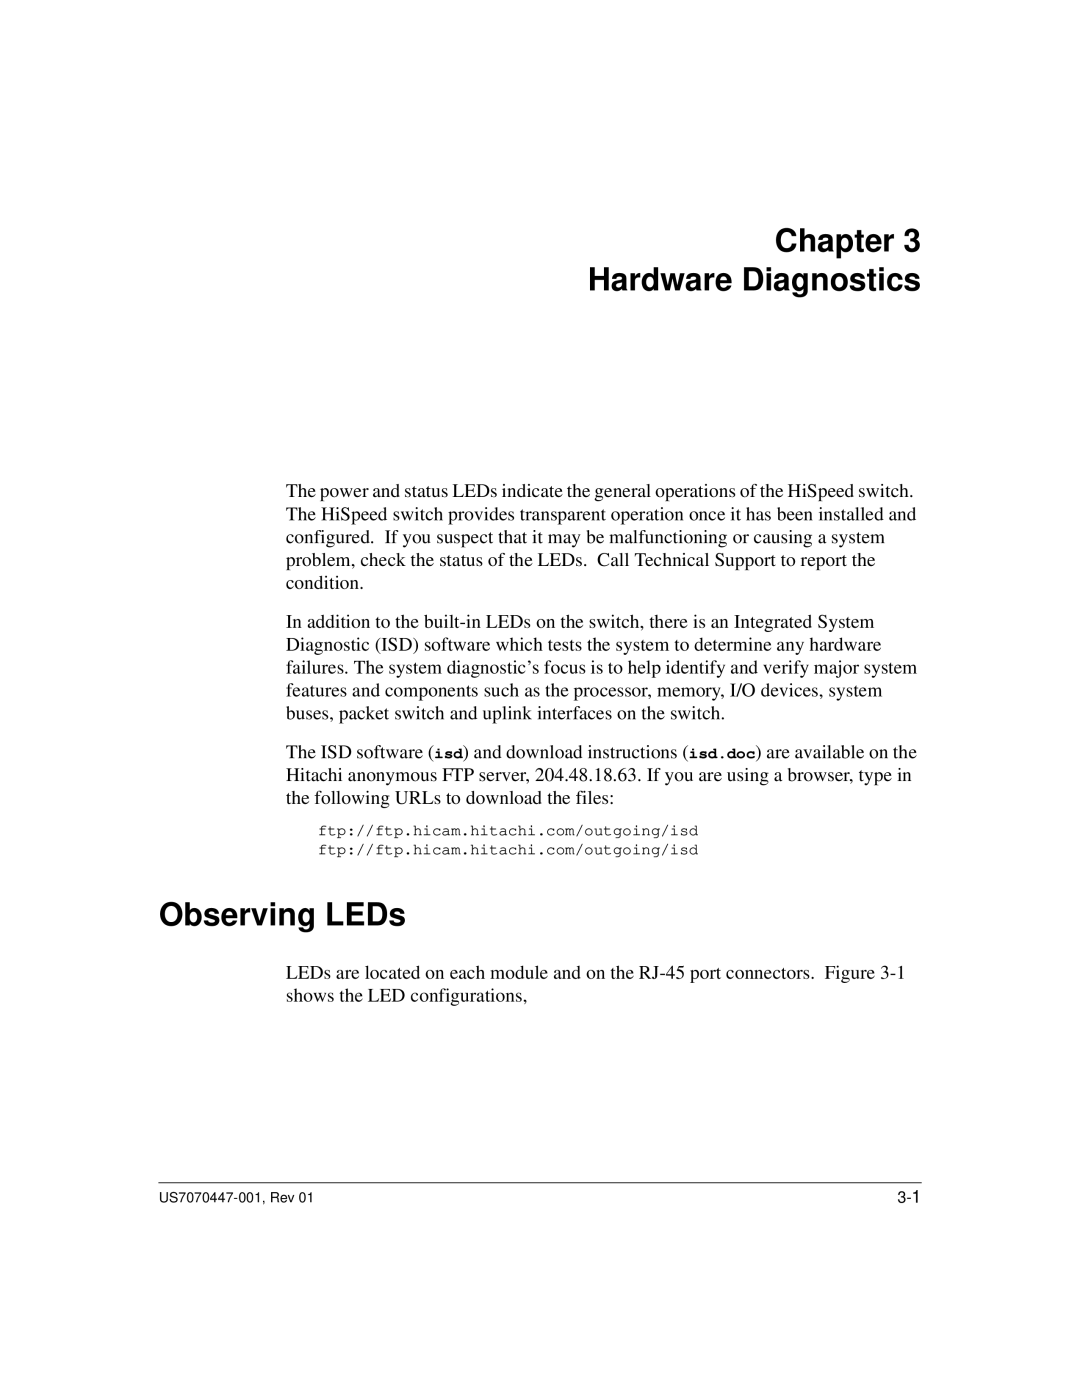 Hitachi US7070447-001 manual Chapter Hardware Diagnostics, Observing LEDs 